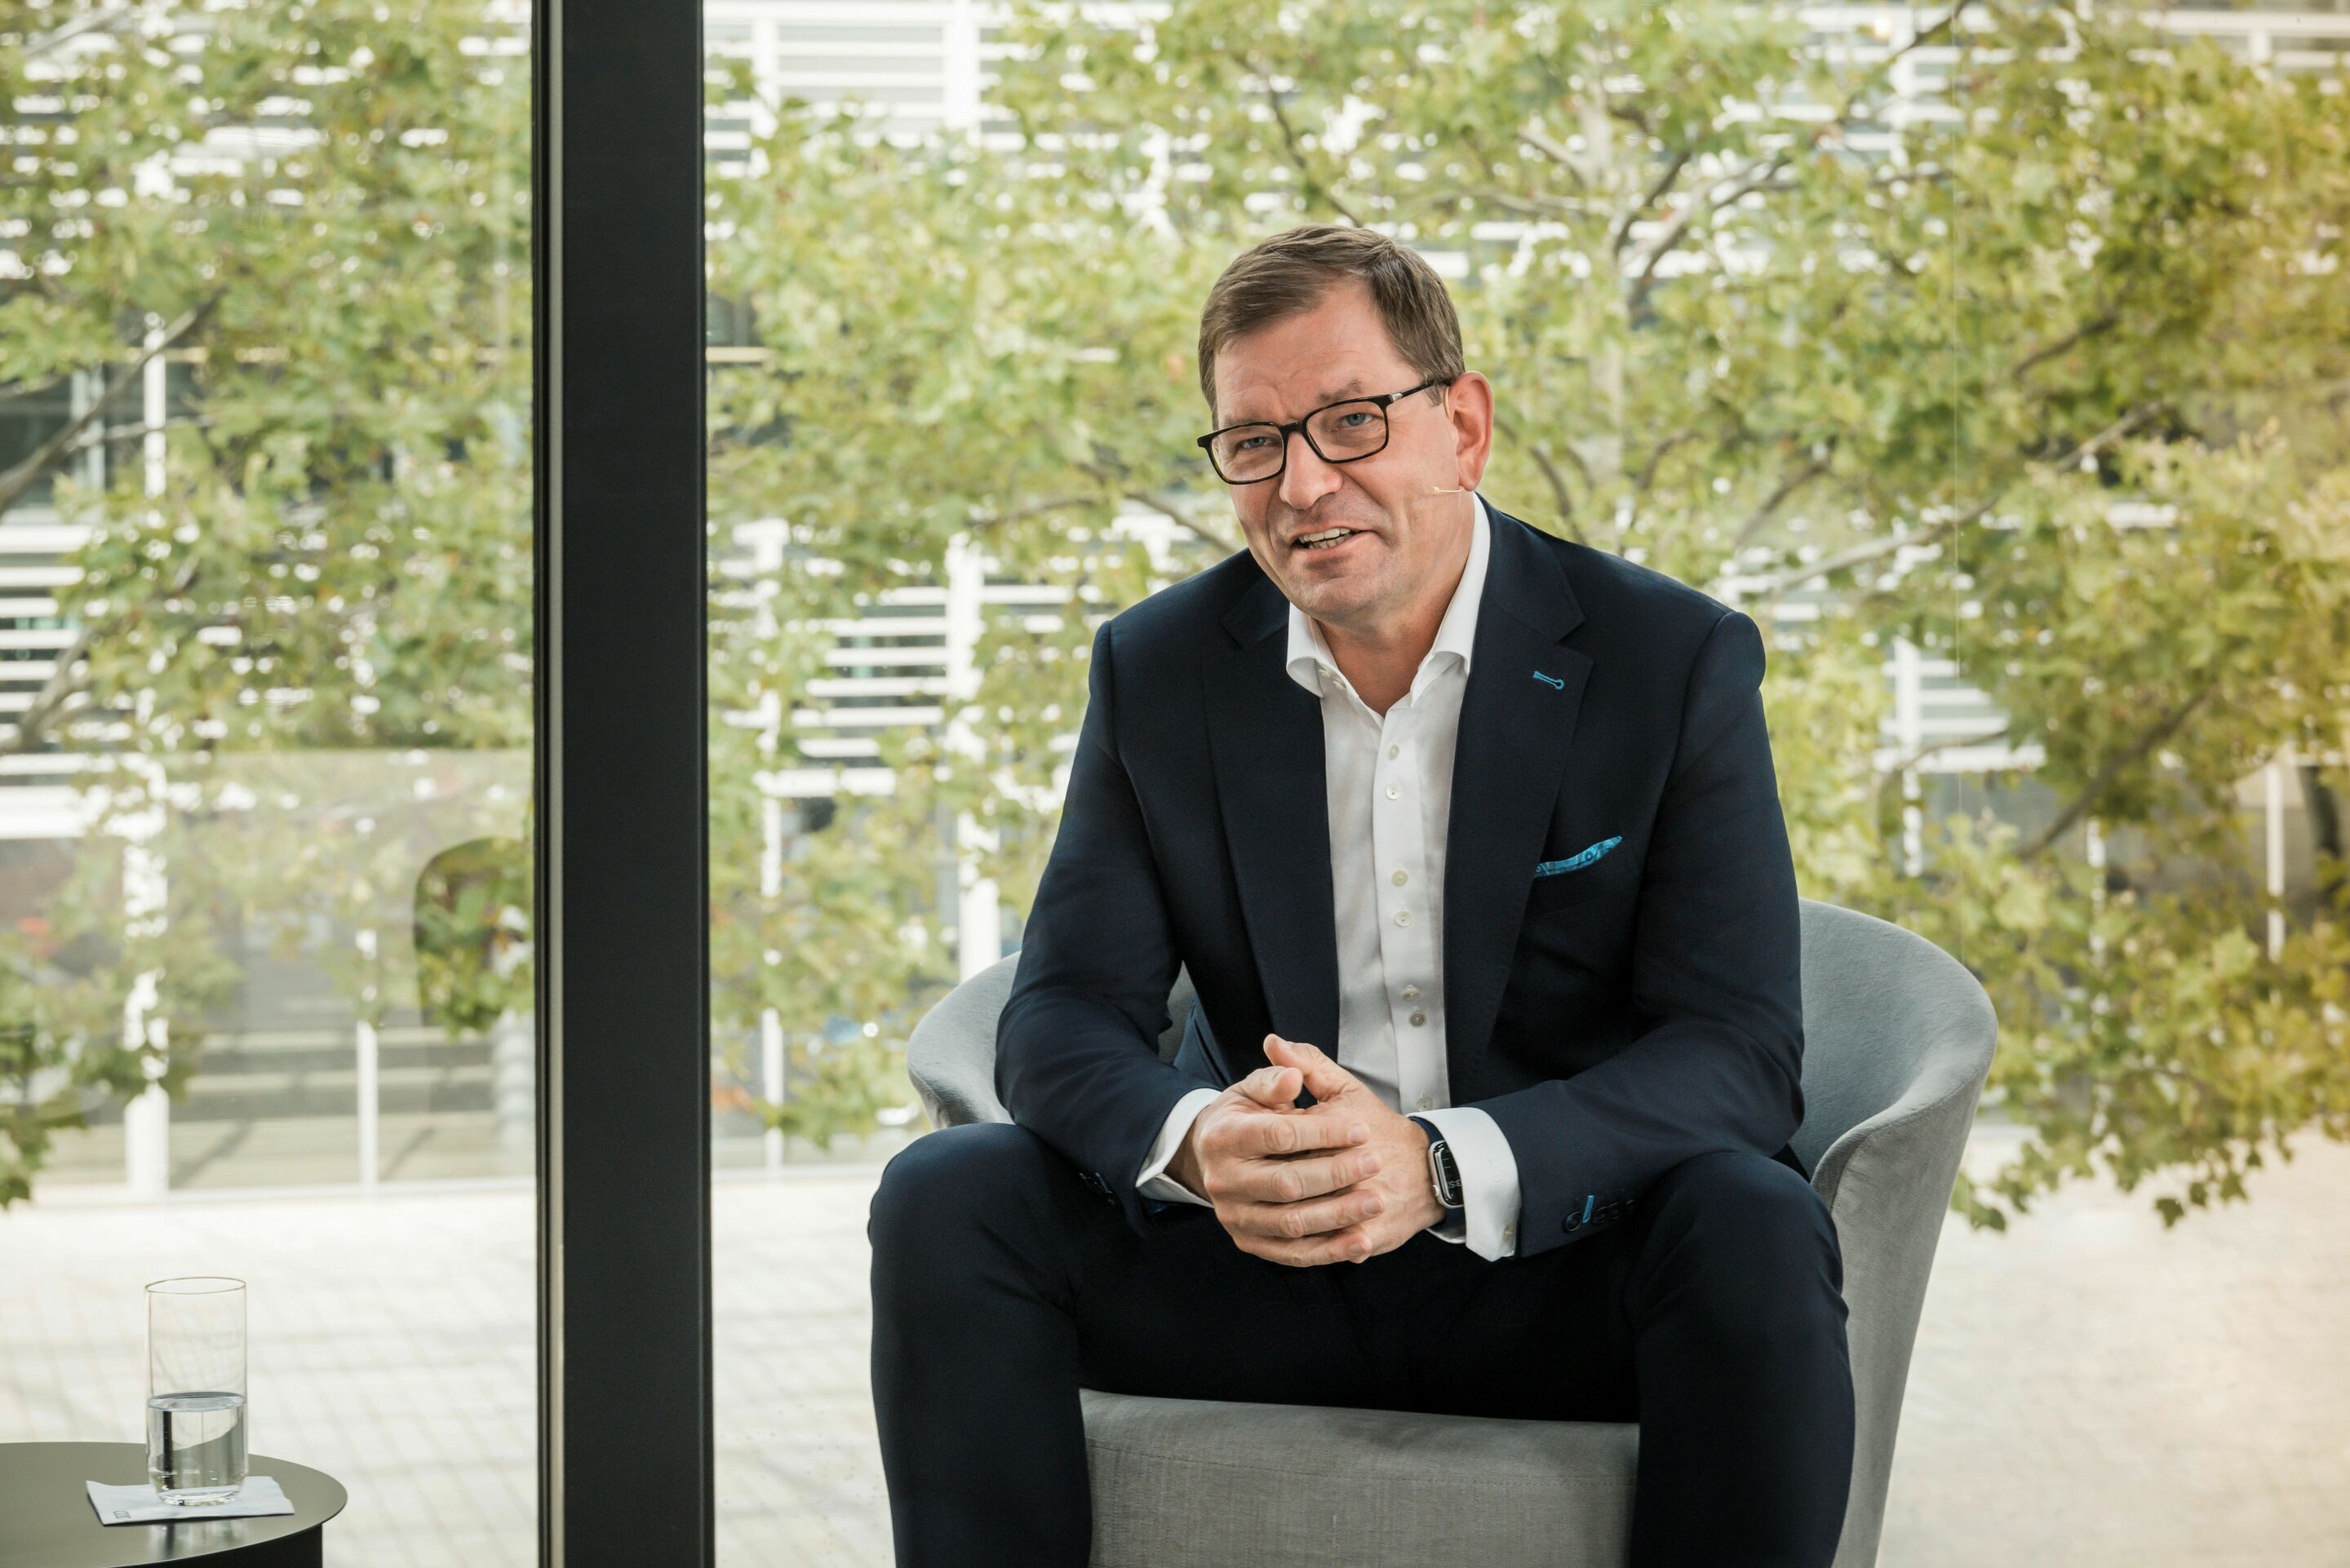 “Vorsprung 2030”: CEO Markus Duesmann on Audi’s sustainable premium mobility transformation (key statements)